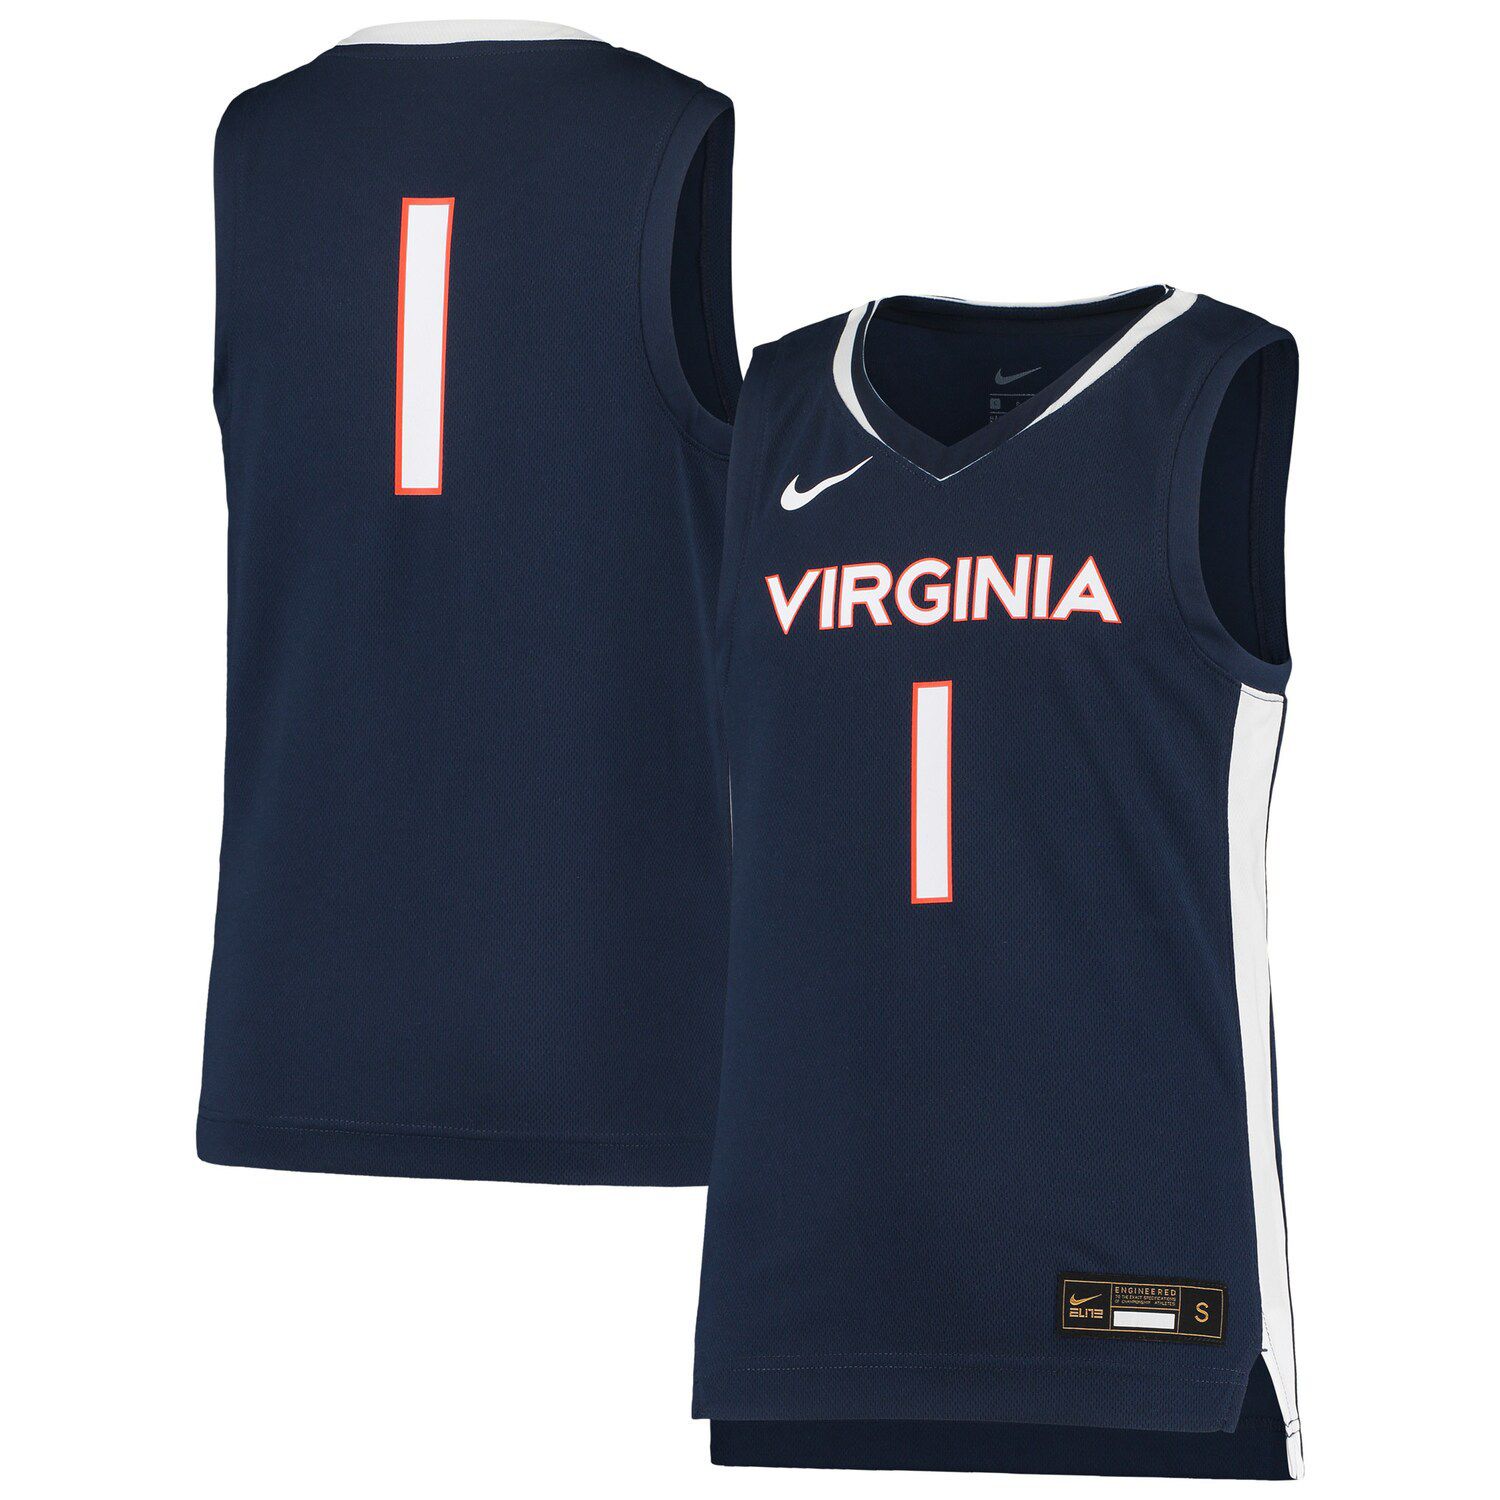 virginia basketball jersey